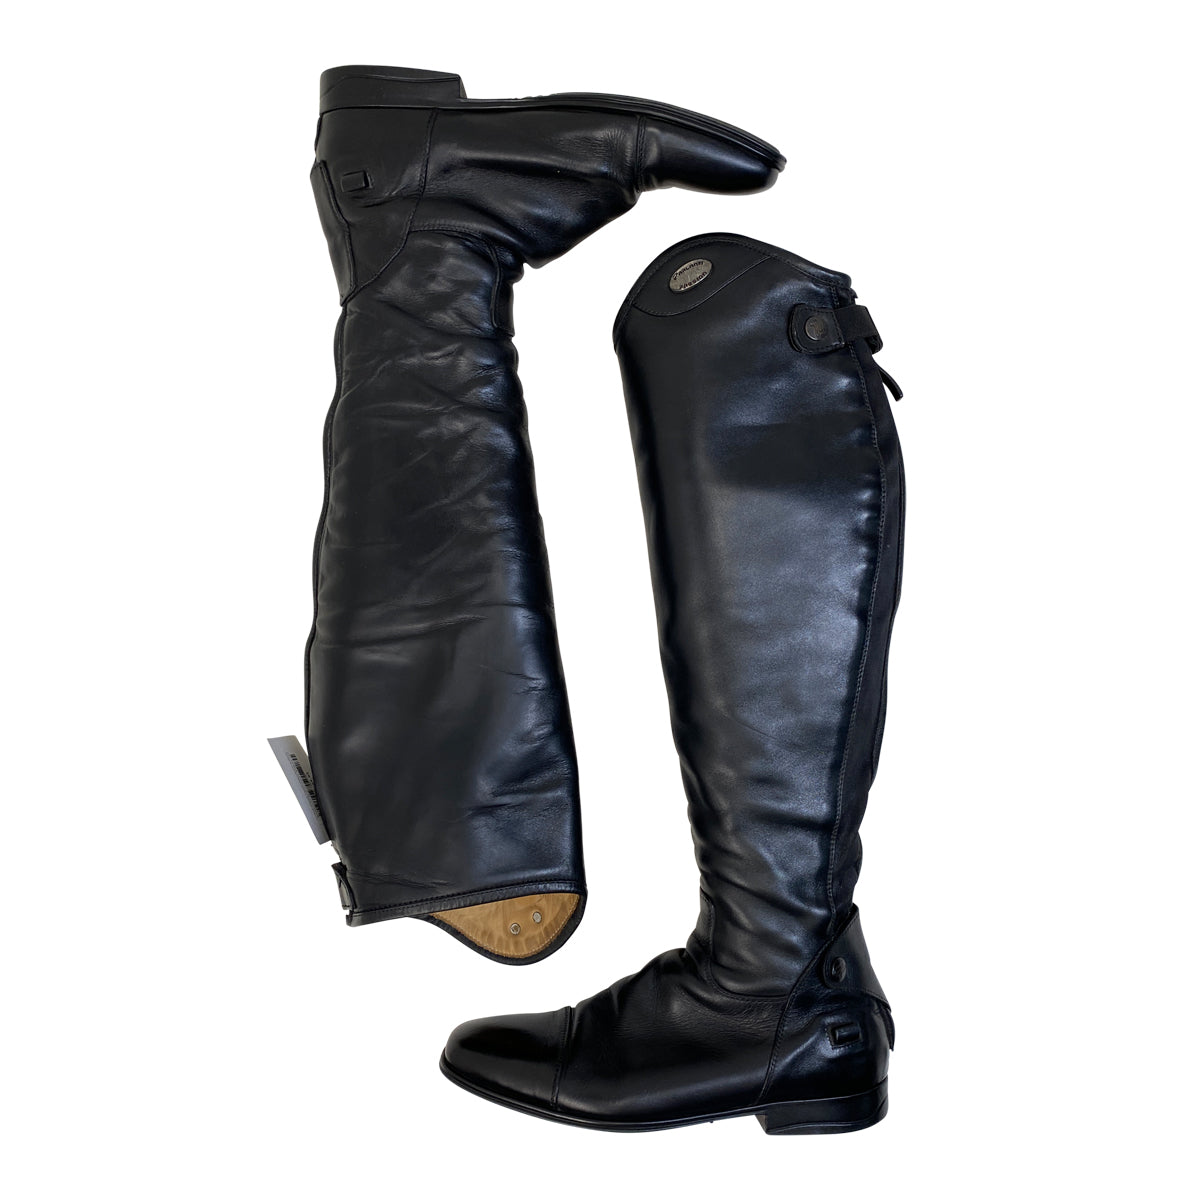 Parlanti Denver Classic Dress Boots in Black